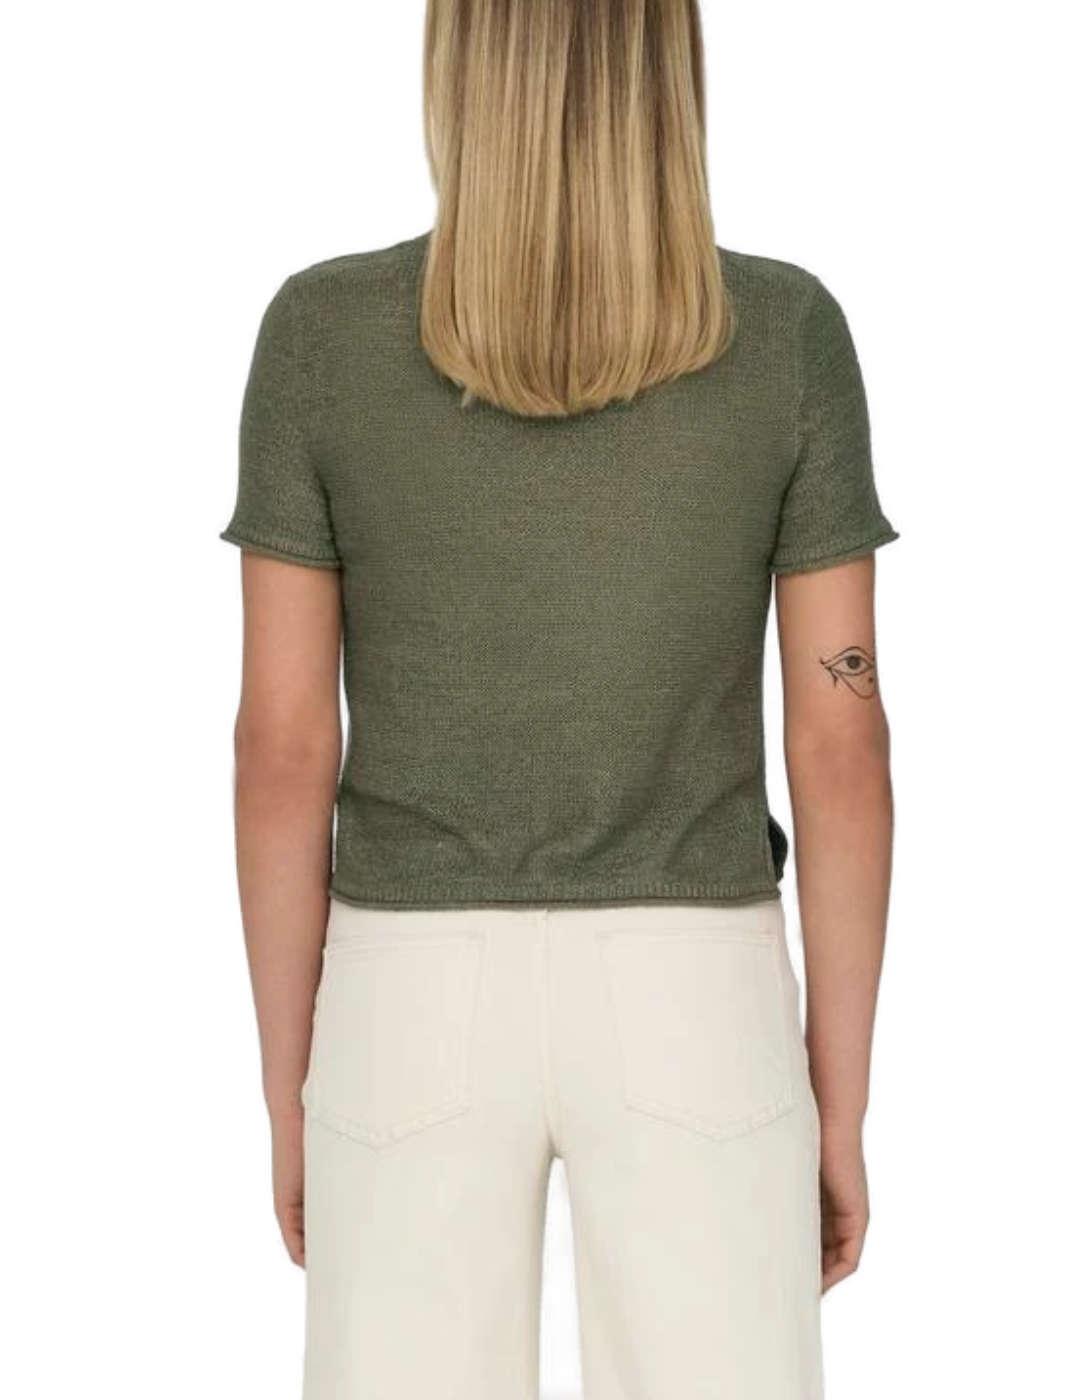 Camiseta Only Sunny verde de punto manga corta para mujer